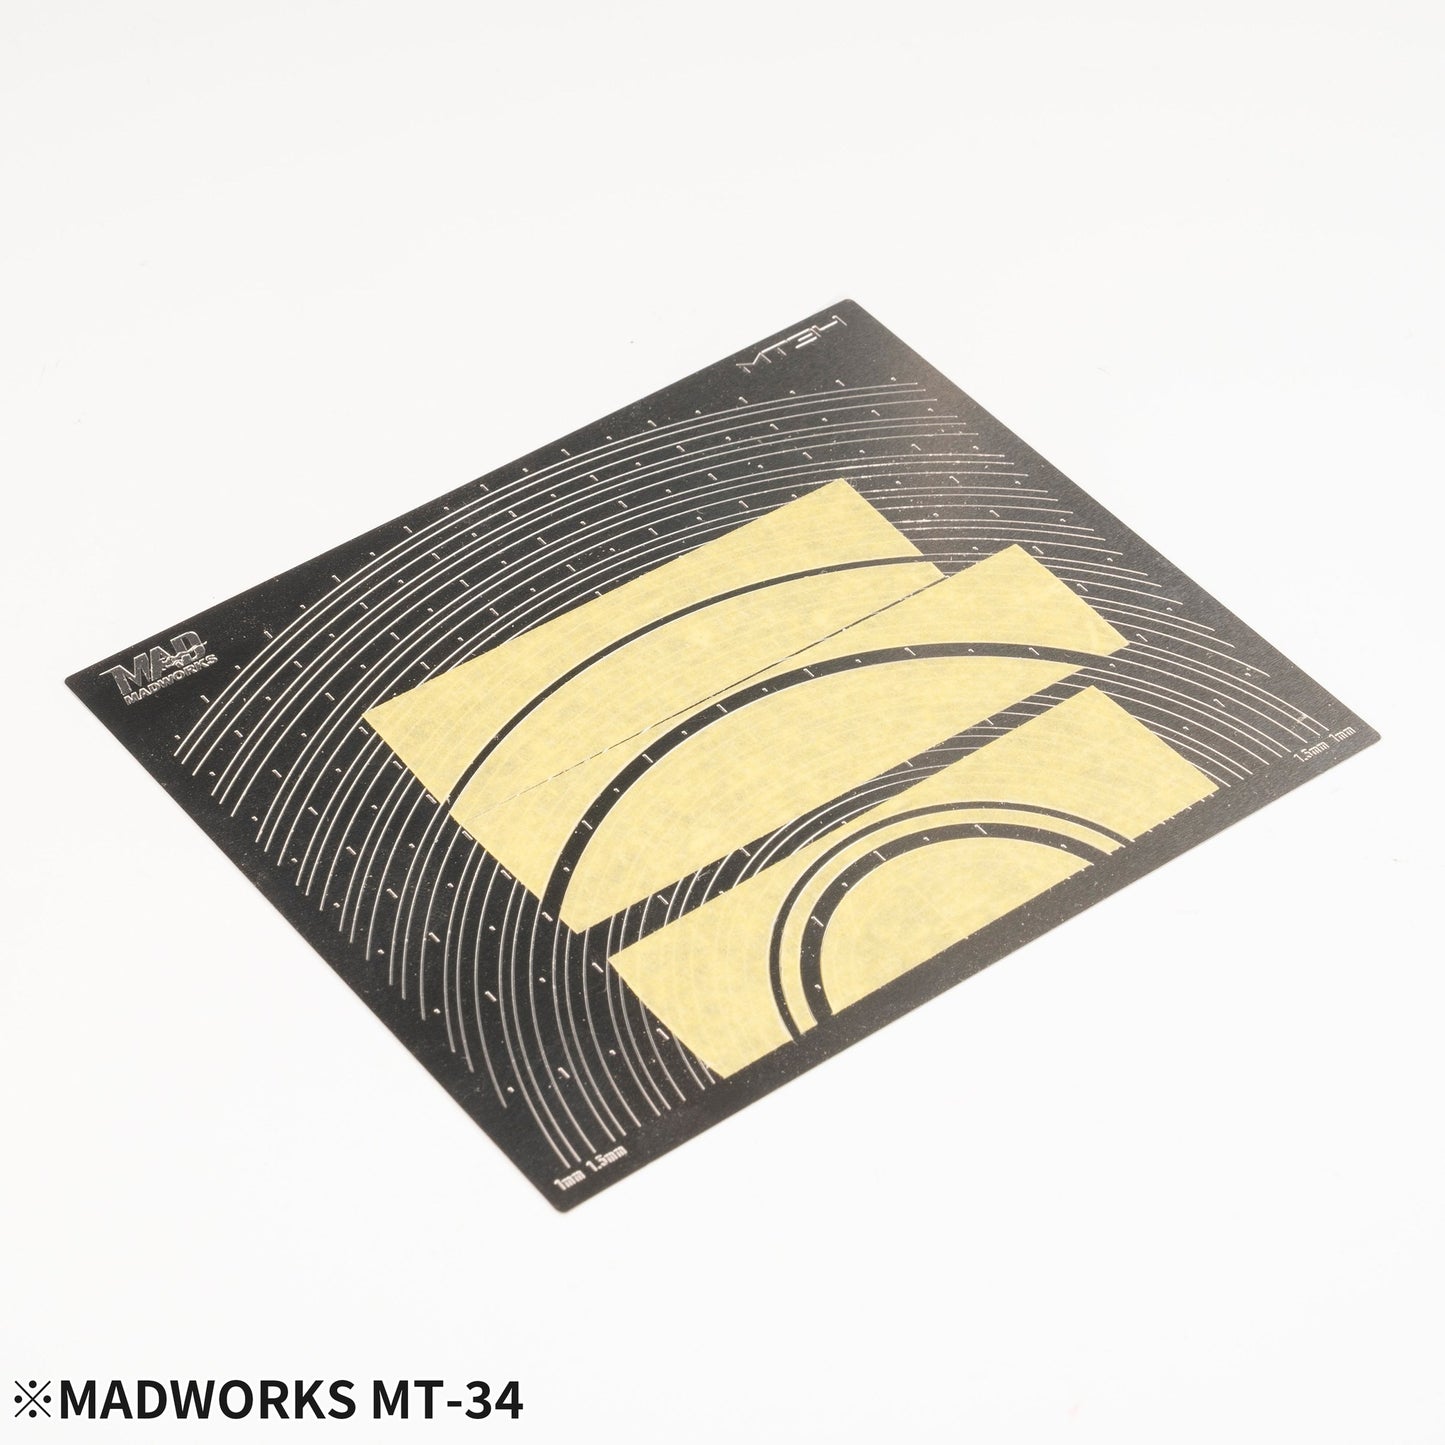 Madworks MT-22/MT-33/MT-34 Arc Cutting Template / Masking tape template